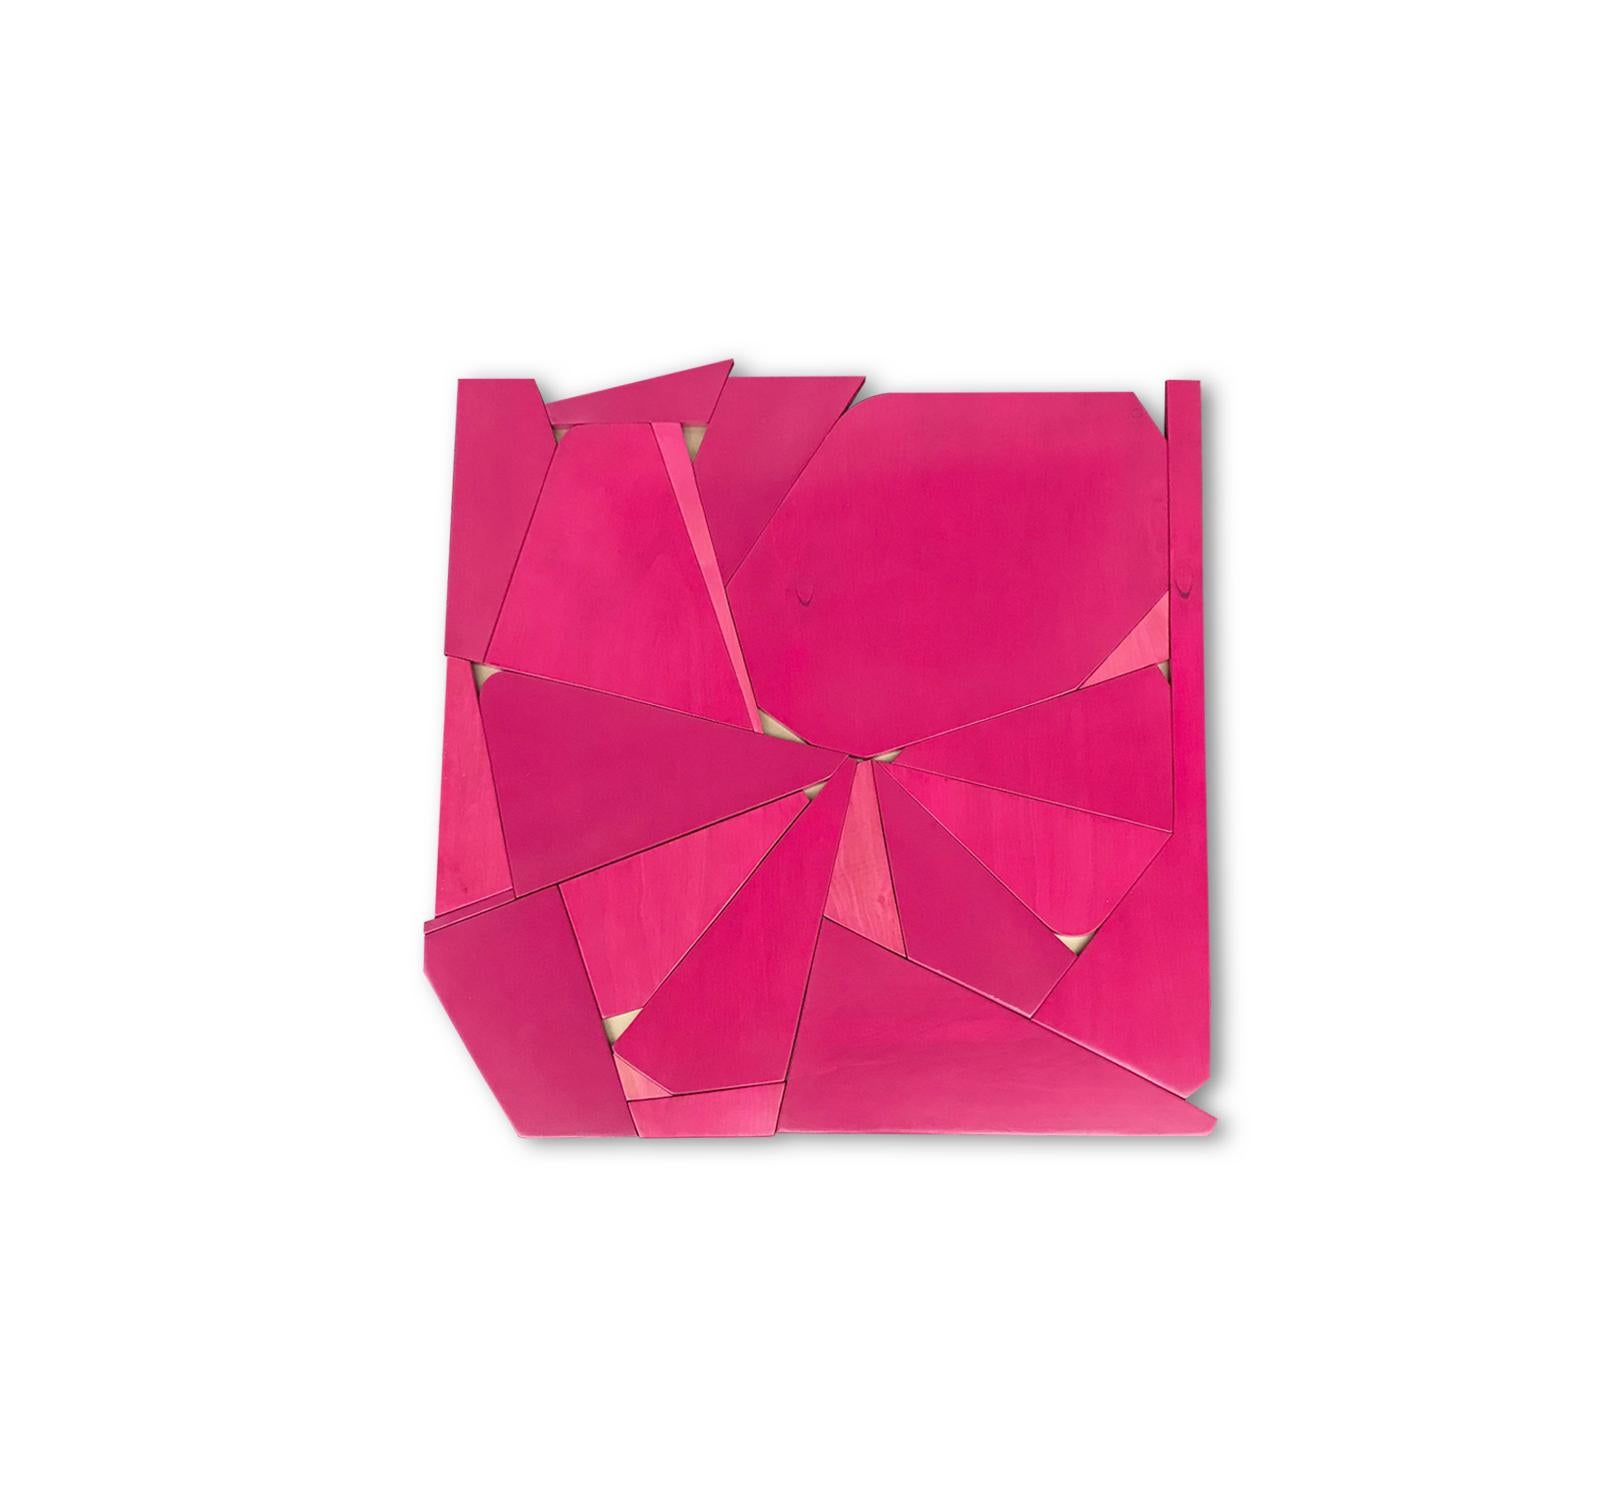 Pinwheel (mangenta modern abstract wall sculpture minimal geometric design pink) - Painting by Scott Troxel